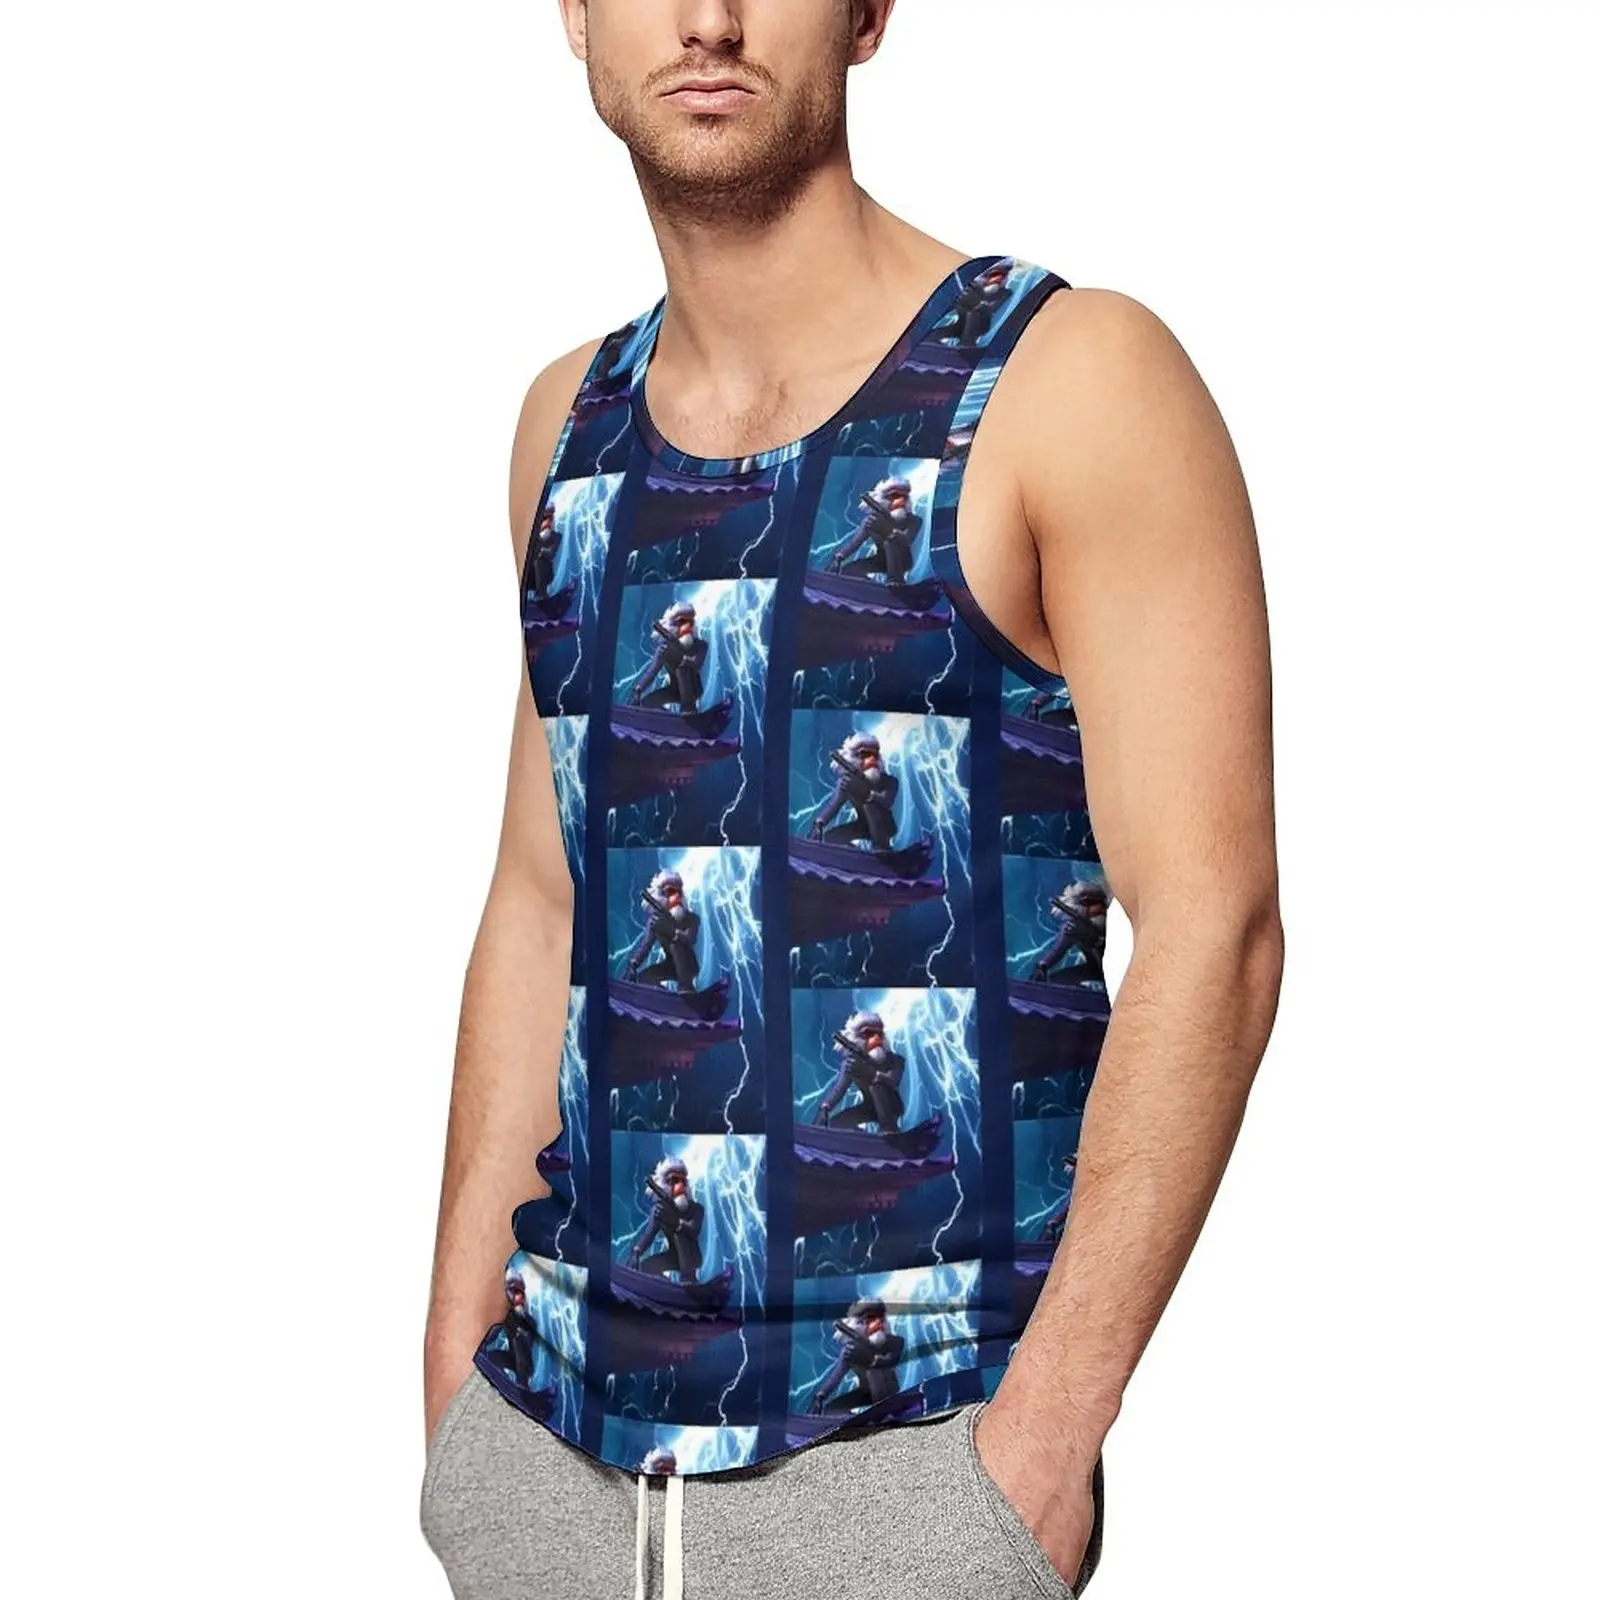 

Hit Monkey Print Tank Top Fun Animal Cool Tops Summer Workout Man Design Sleeveless Vests Plus Size 4XL 5XL